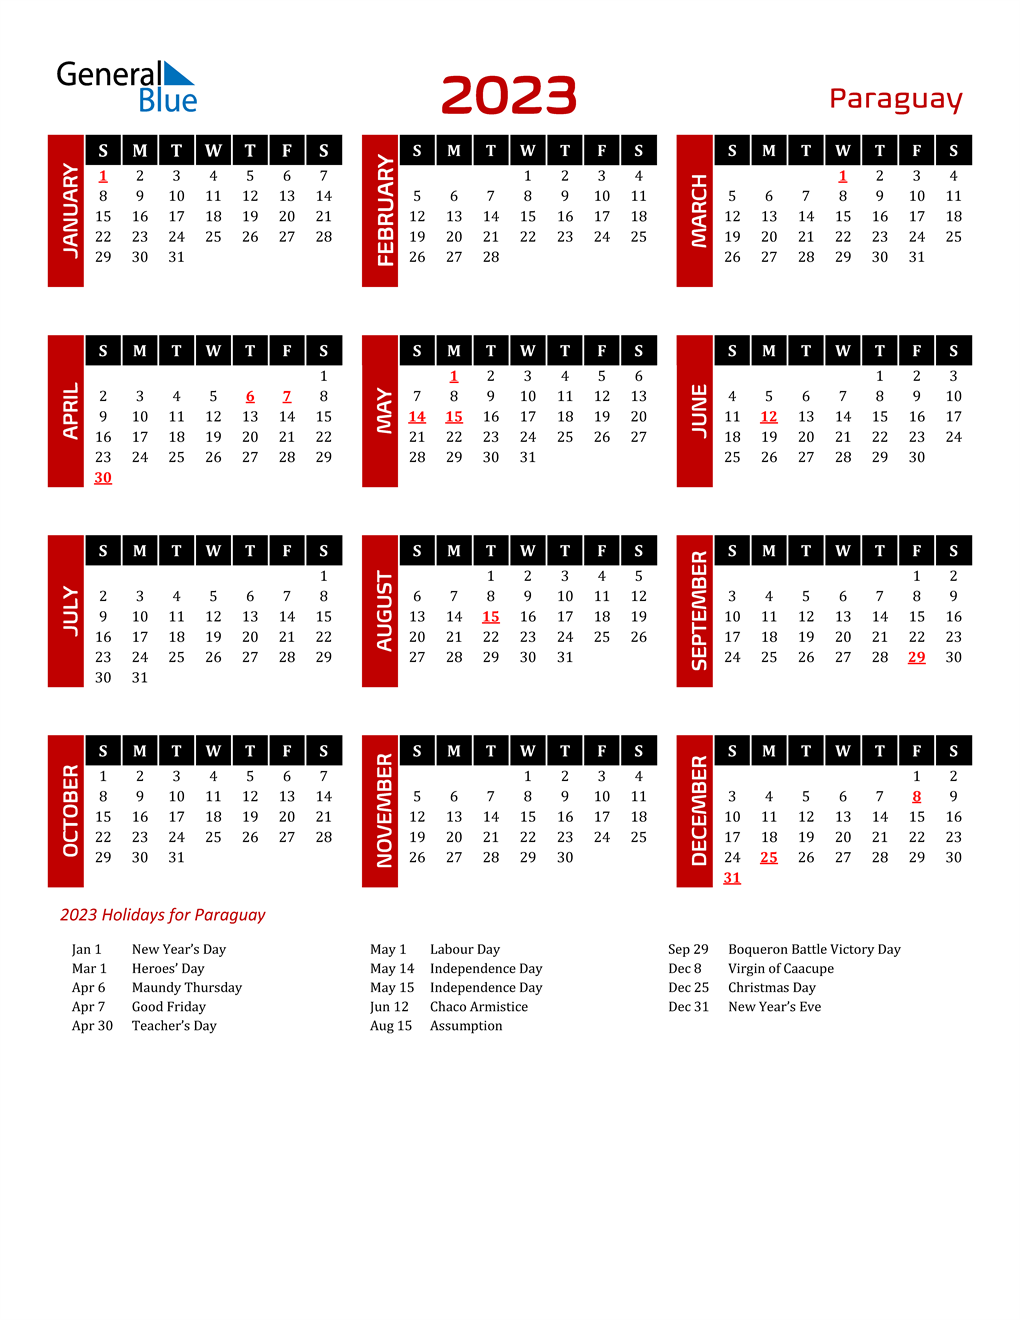 Download Paraguay 2023 Calendar